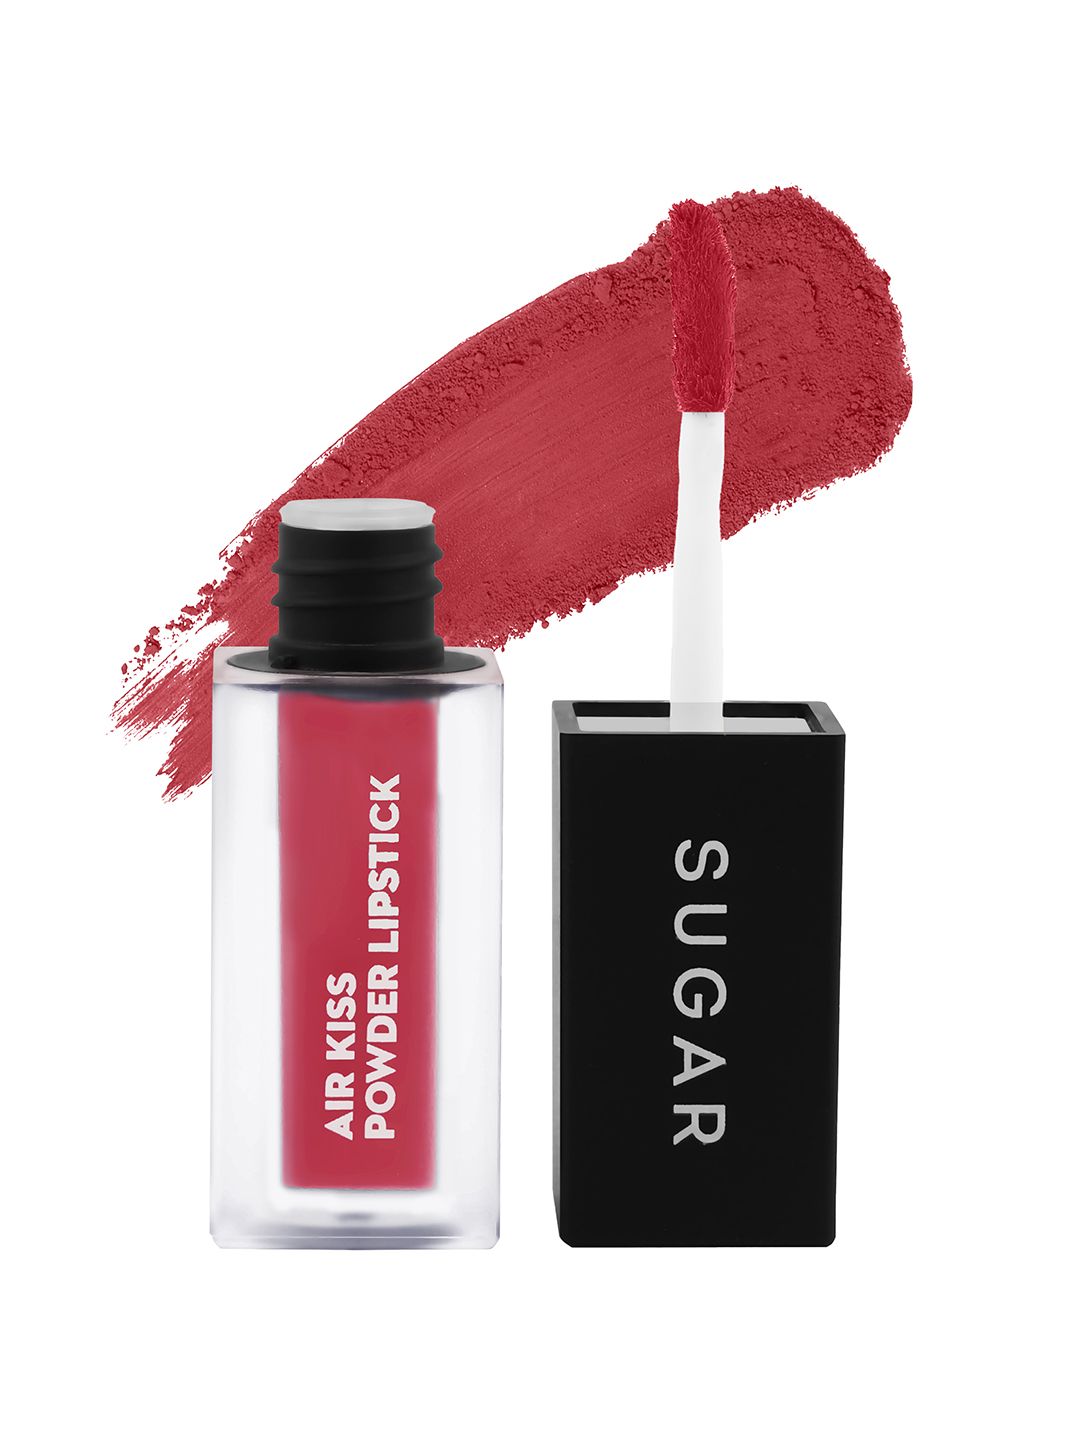 SUGAR Air Kiss Powder Lipstick - Cherry Fluff 04 Price in India